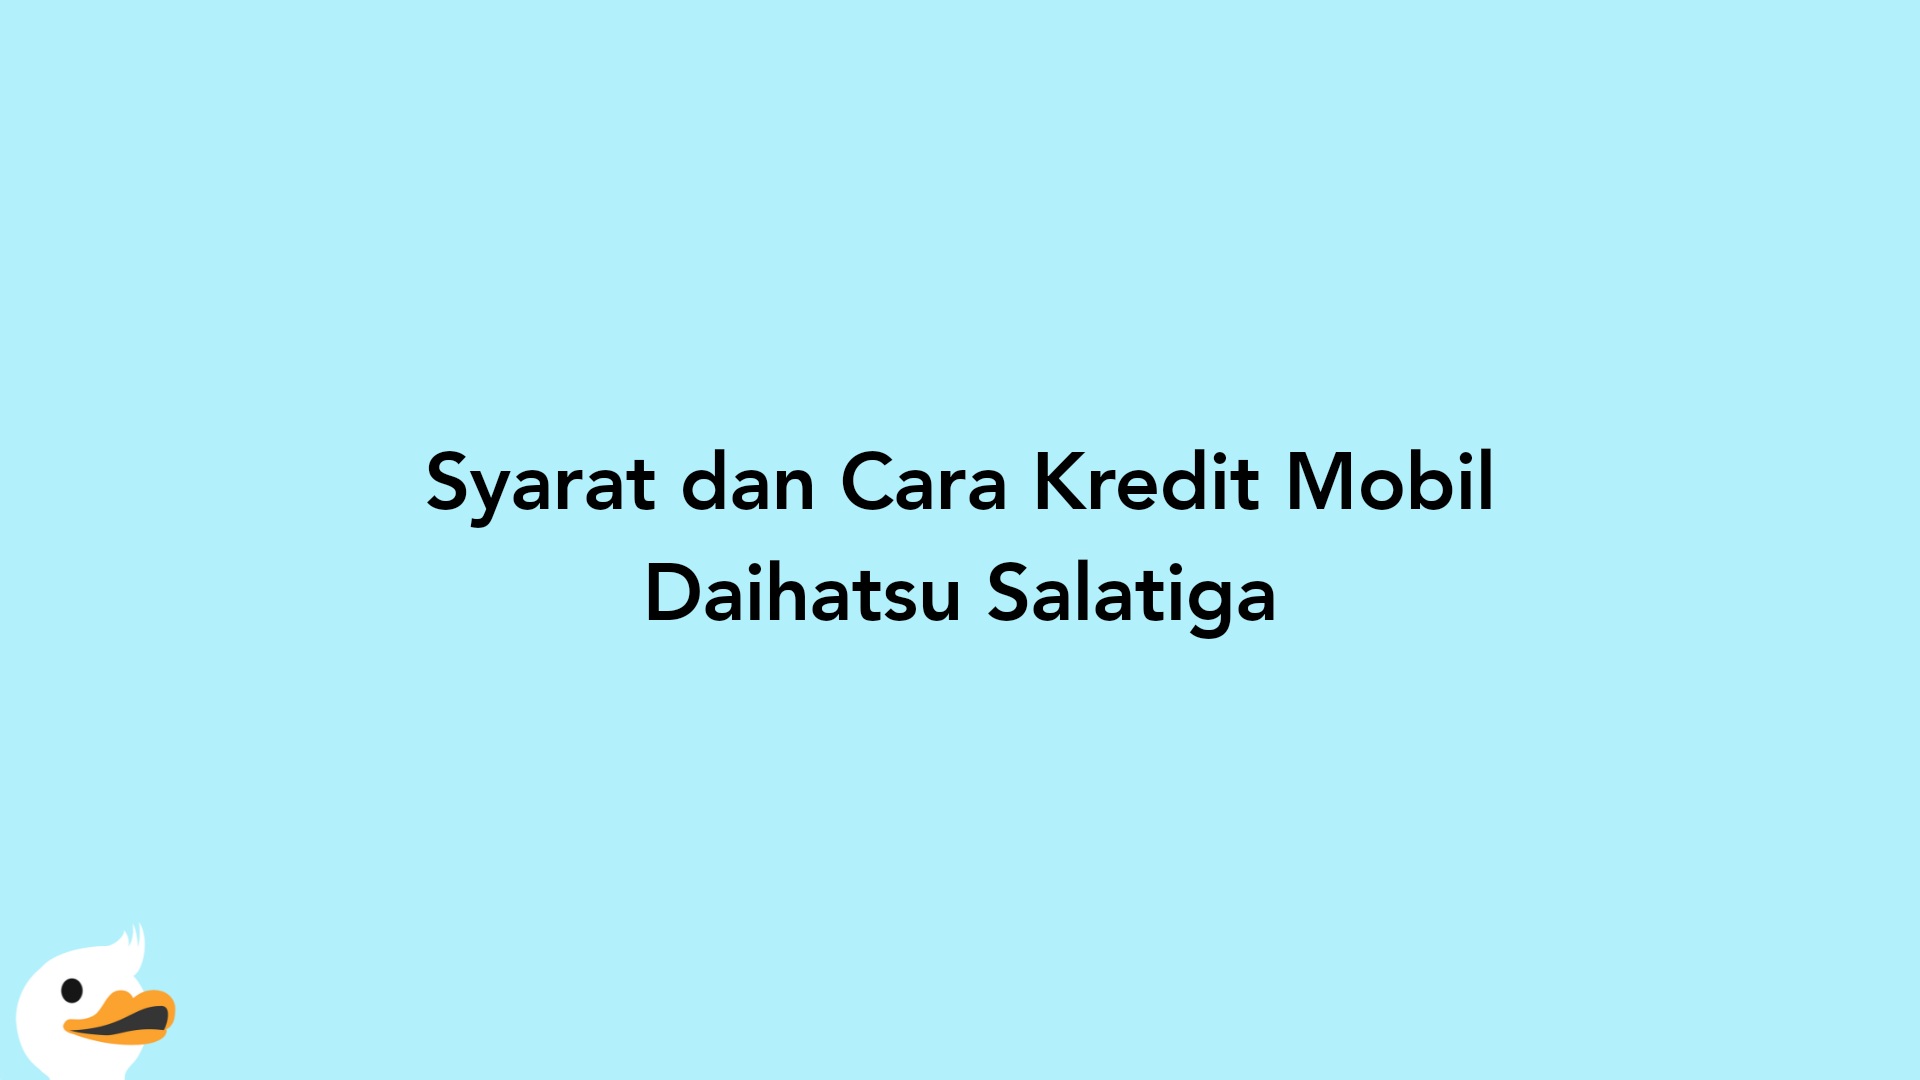 Syarat dan Cara Kredit Mobil Daihatsu Salatiga